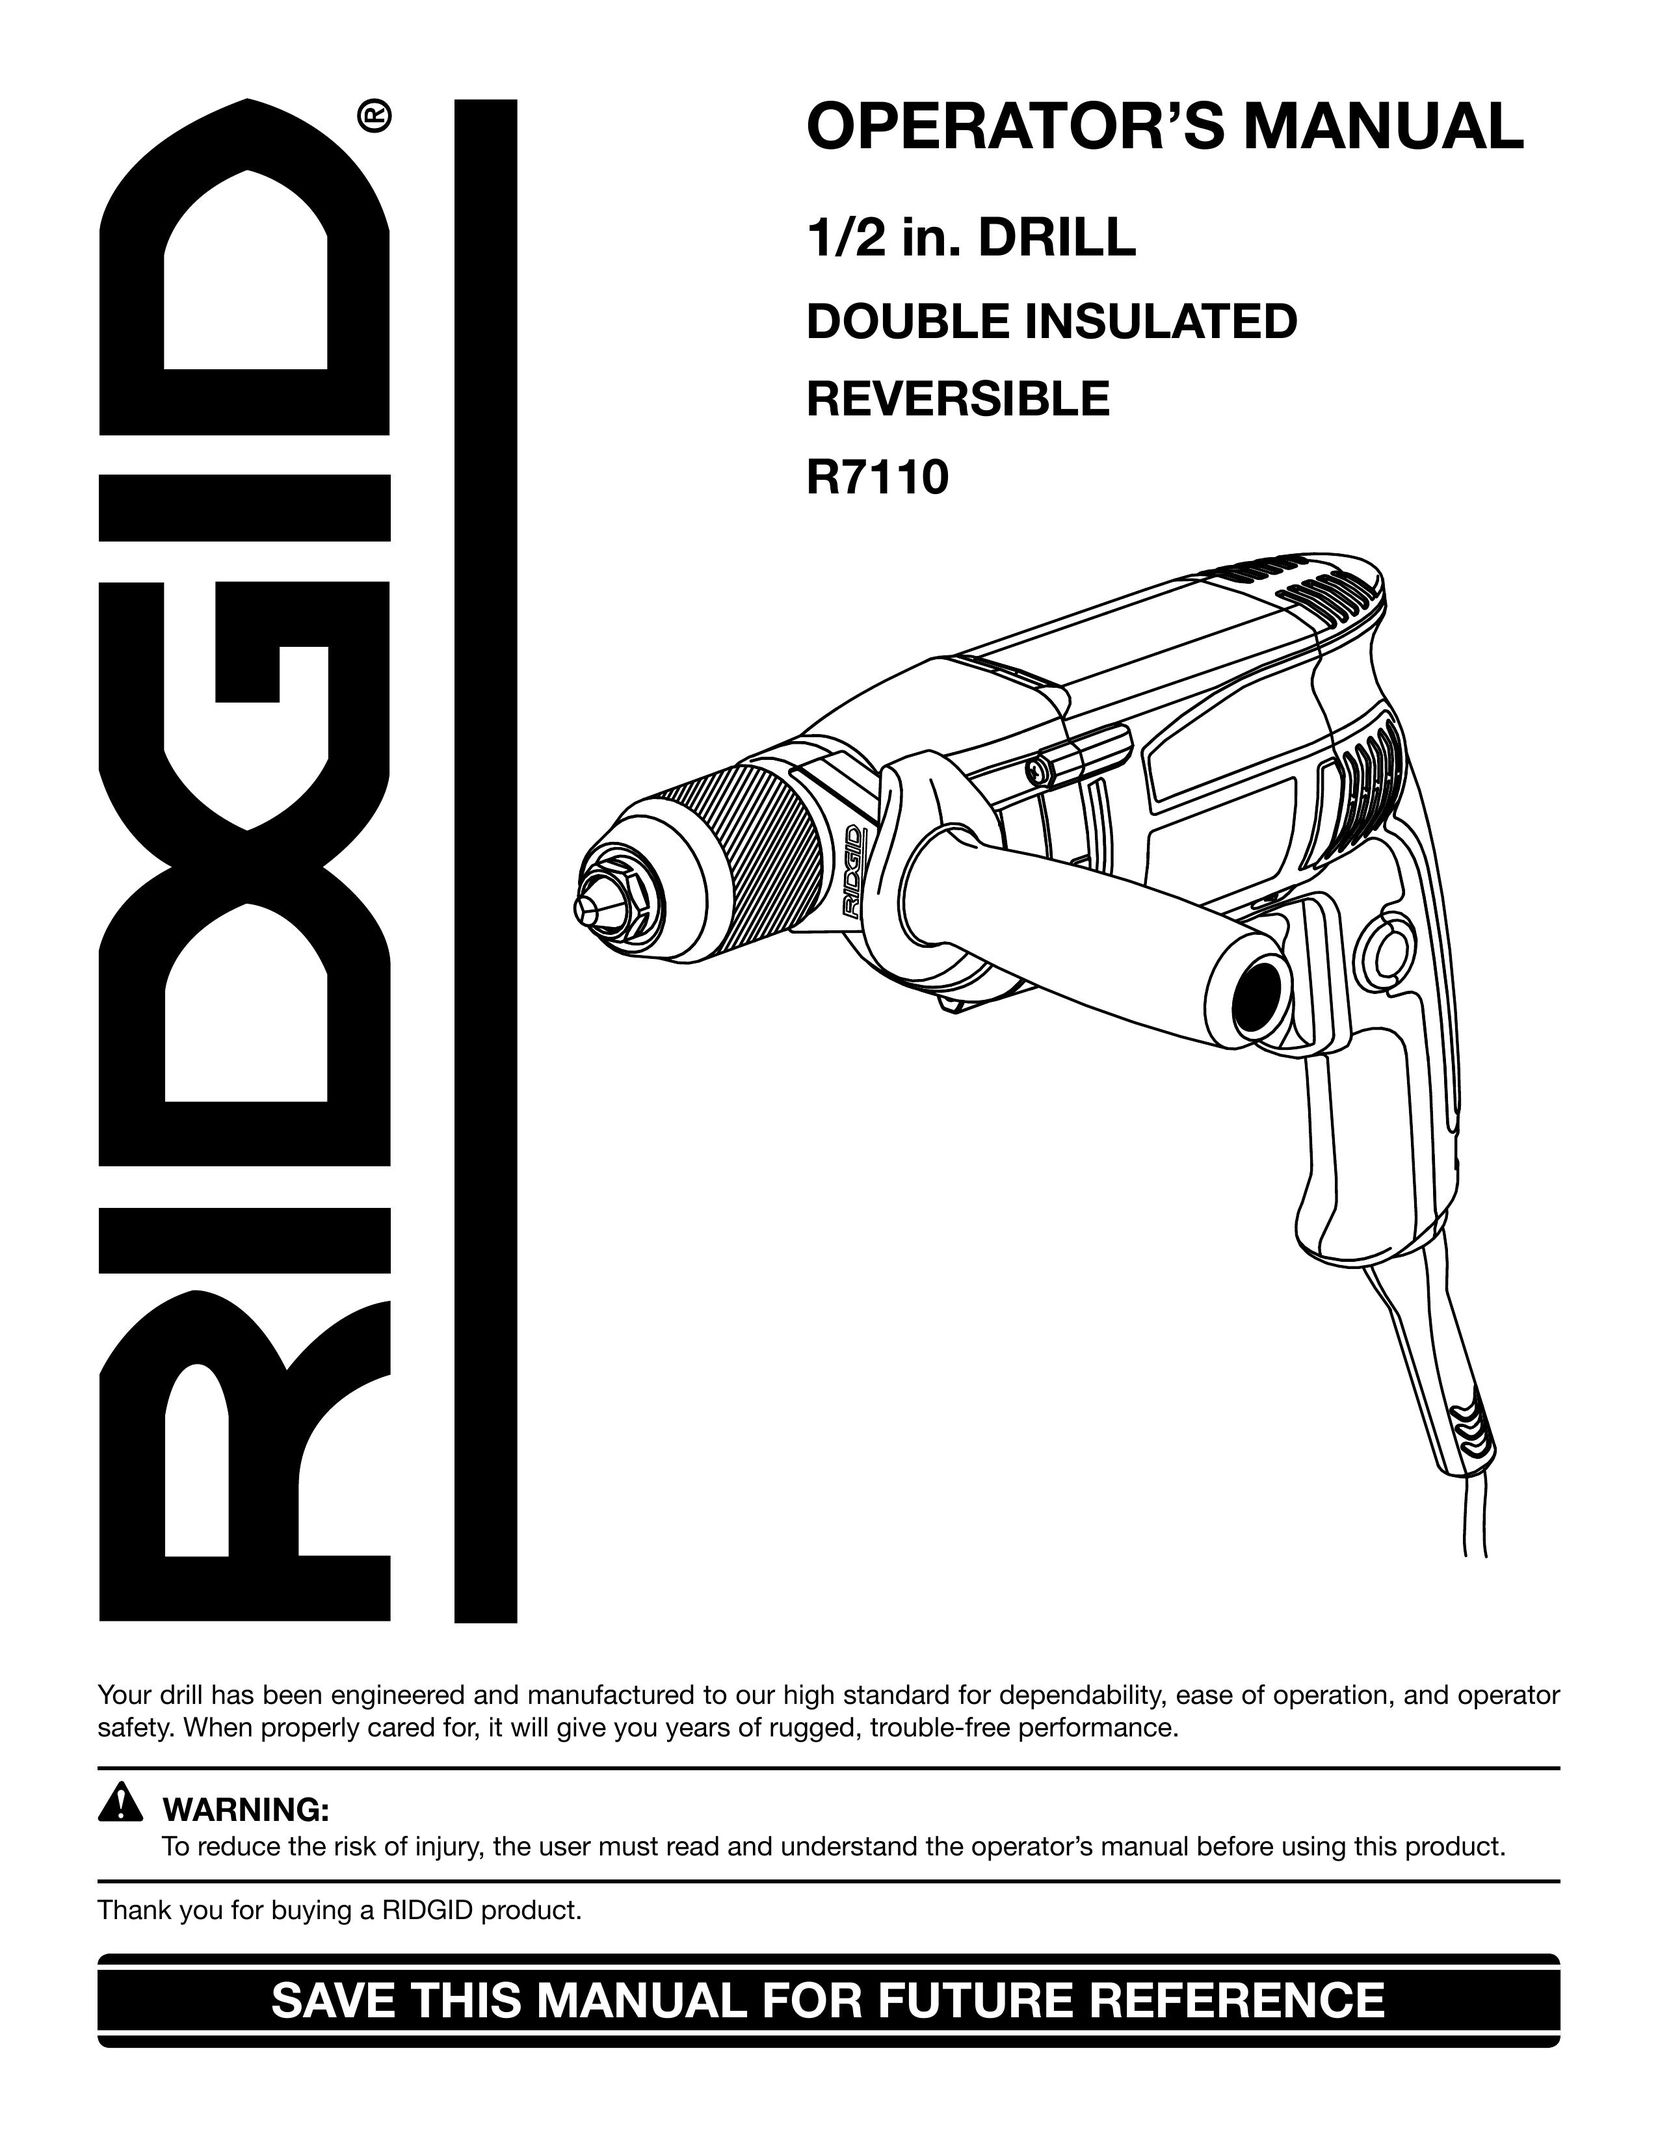 RIDGID R7110 Drill User Manual